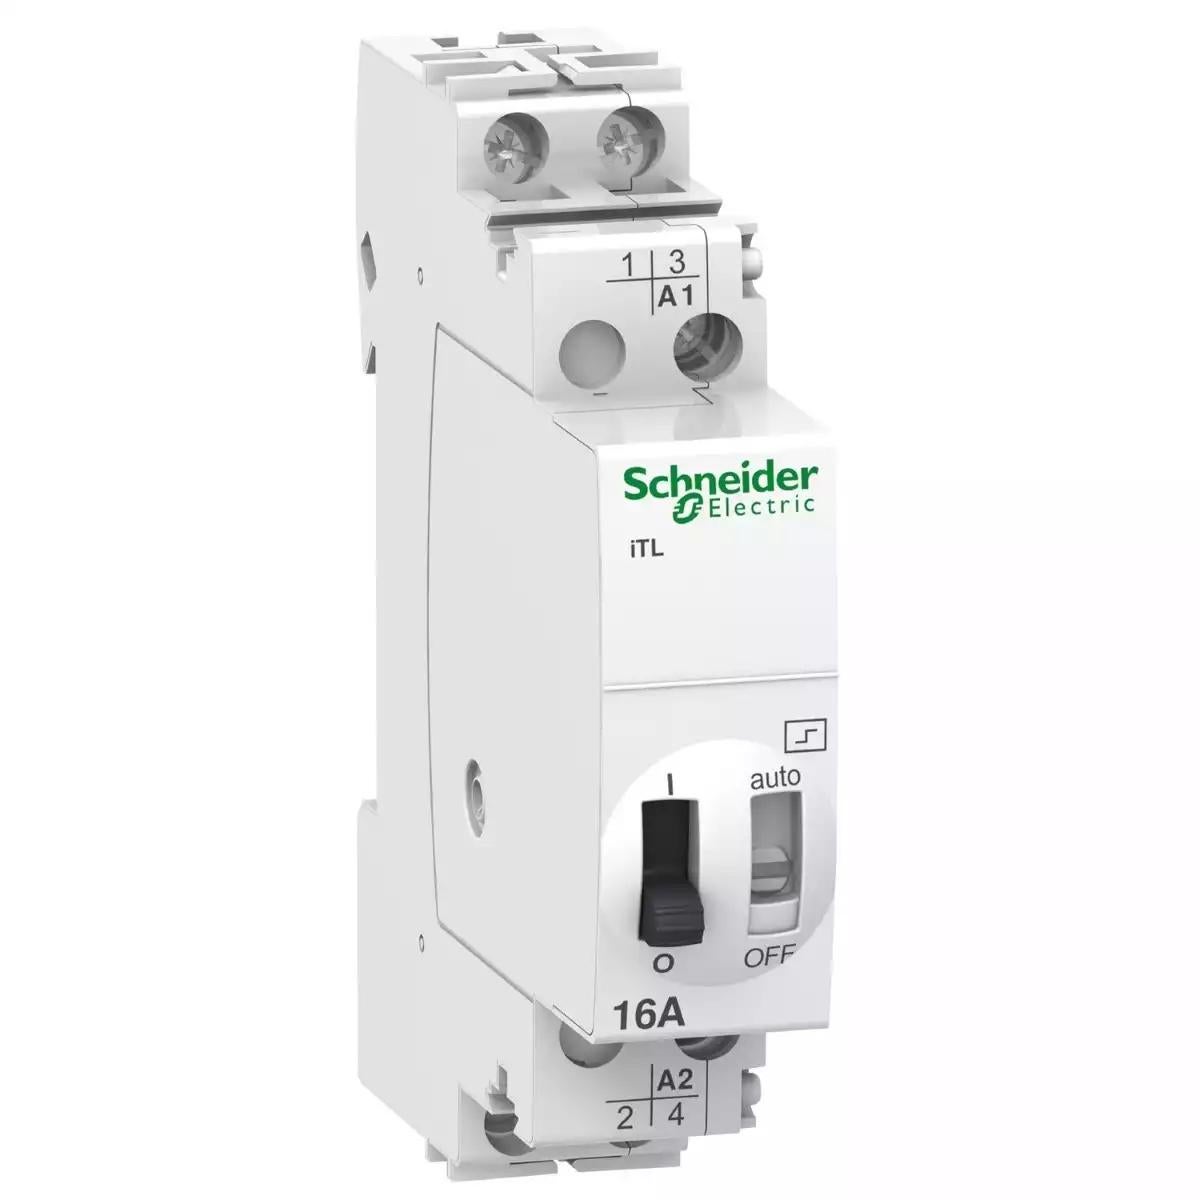 Schneider Electric Acti 9 iTL impulse relay - 2P - 2 NO - 16A - coil 24 VDC - 48 VAC 50/60Hz